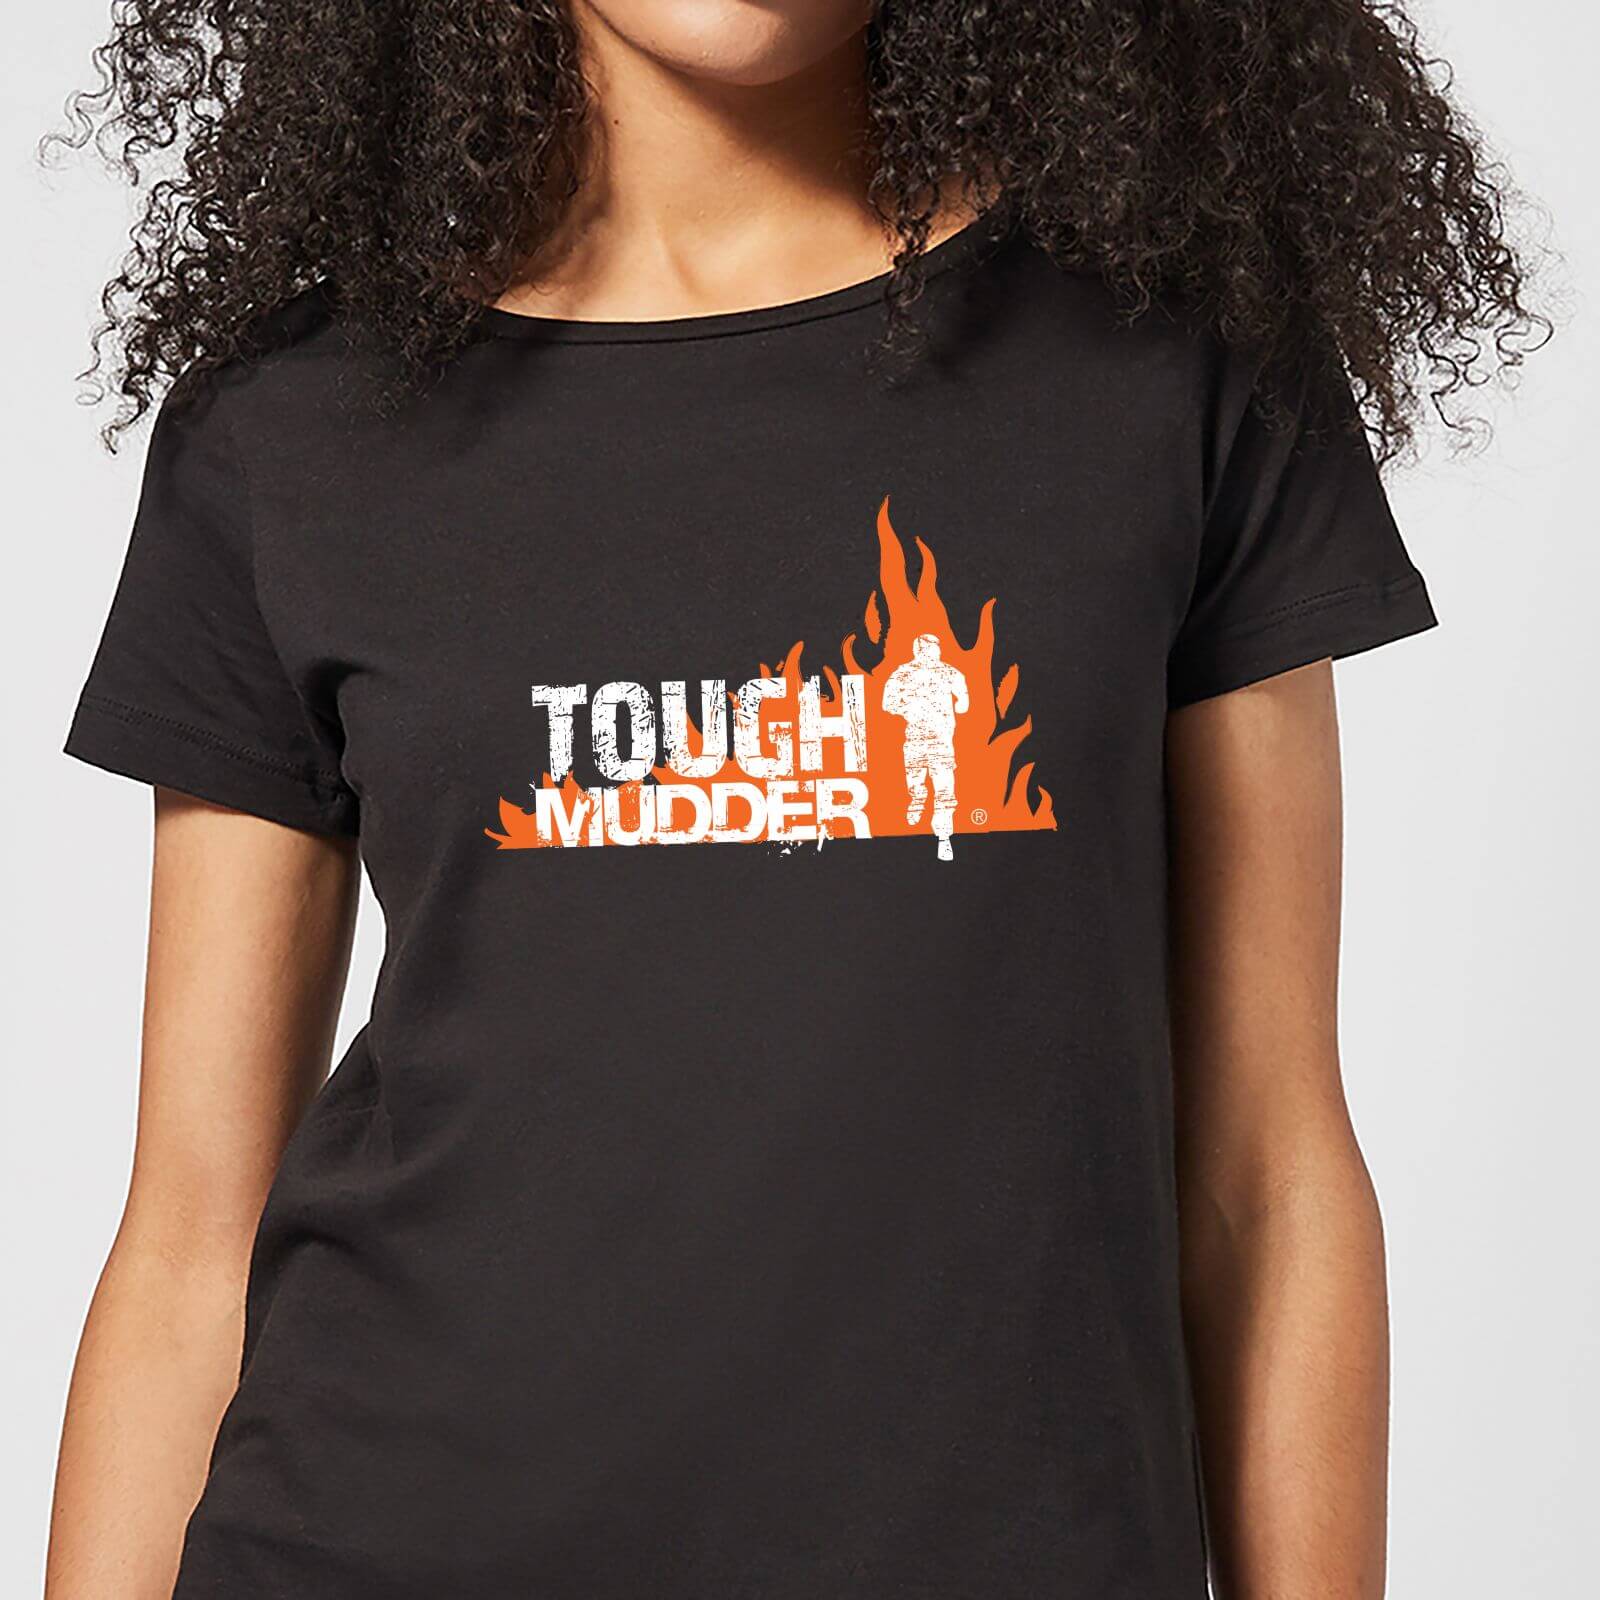 Tough Mudder Logo Women's T-Shirt - Black - S - Black